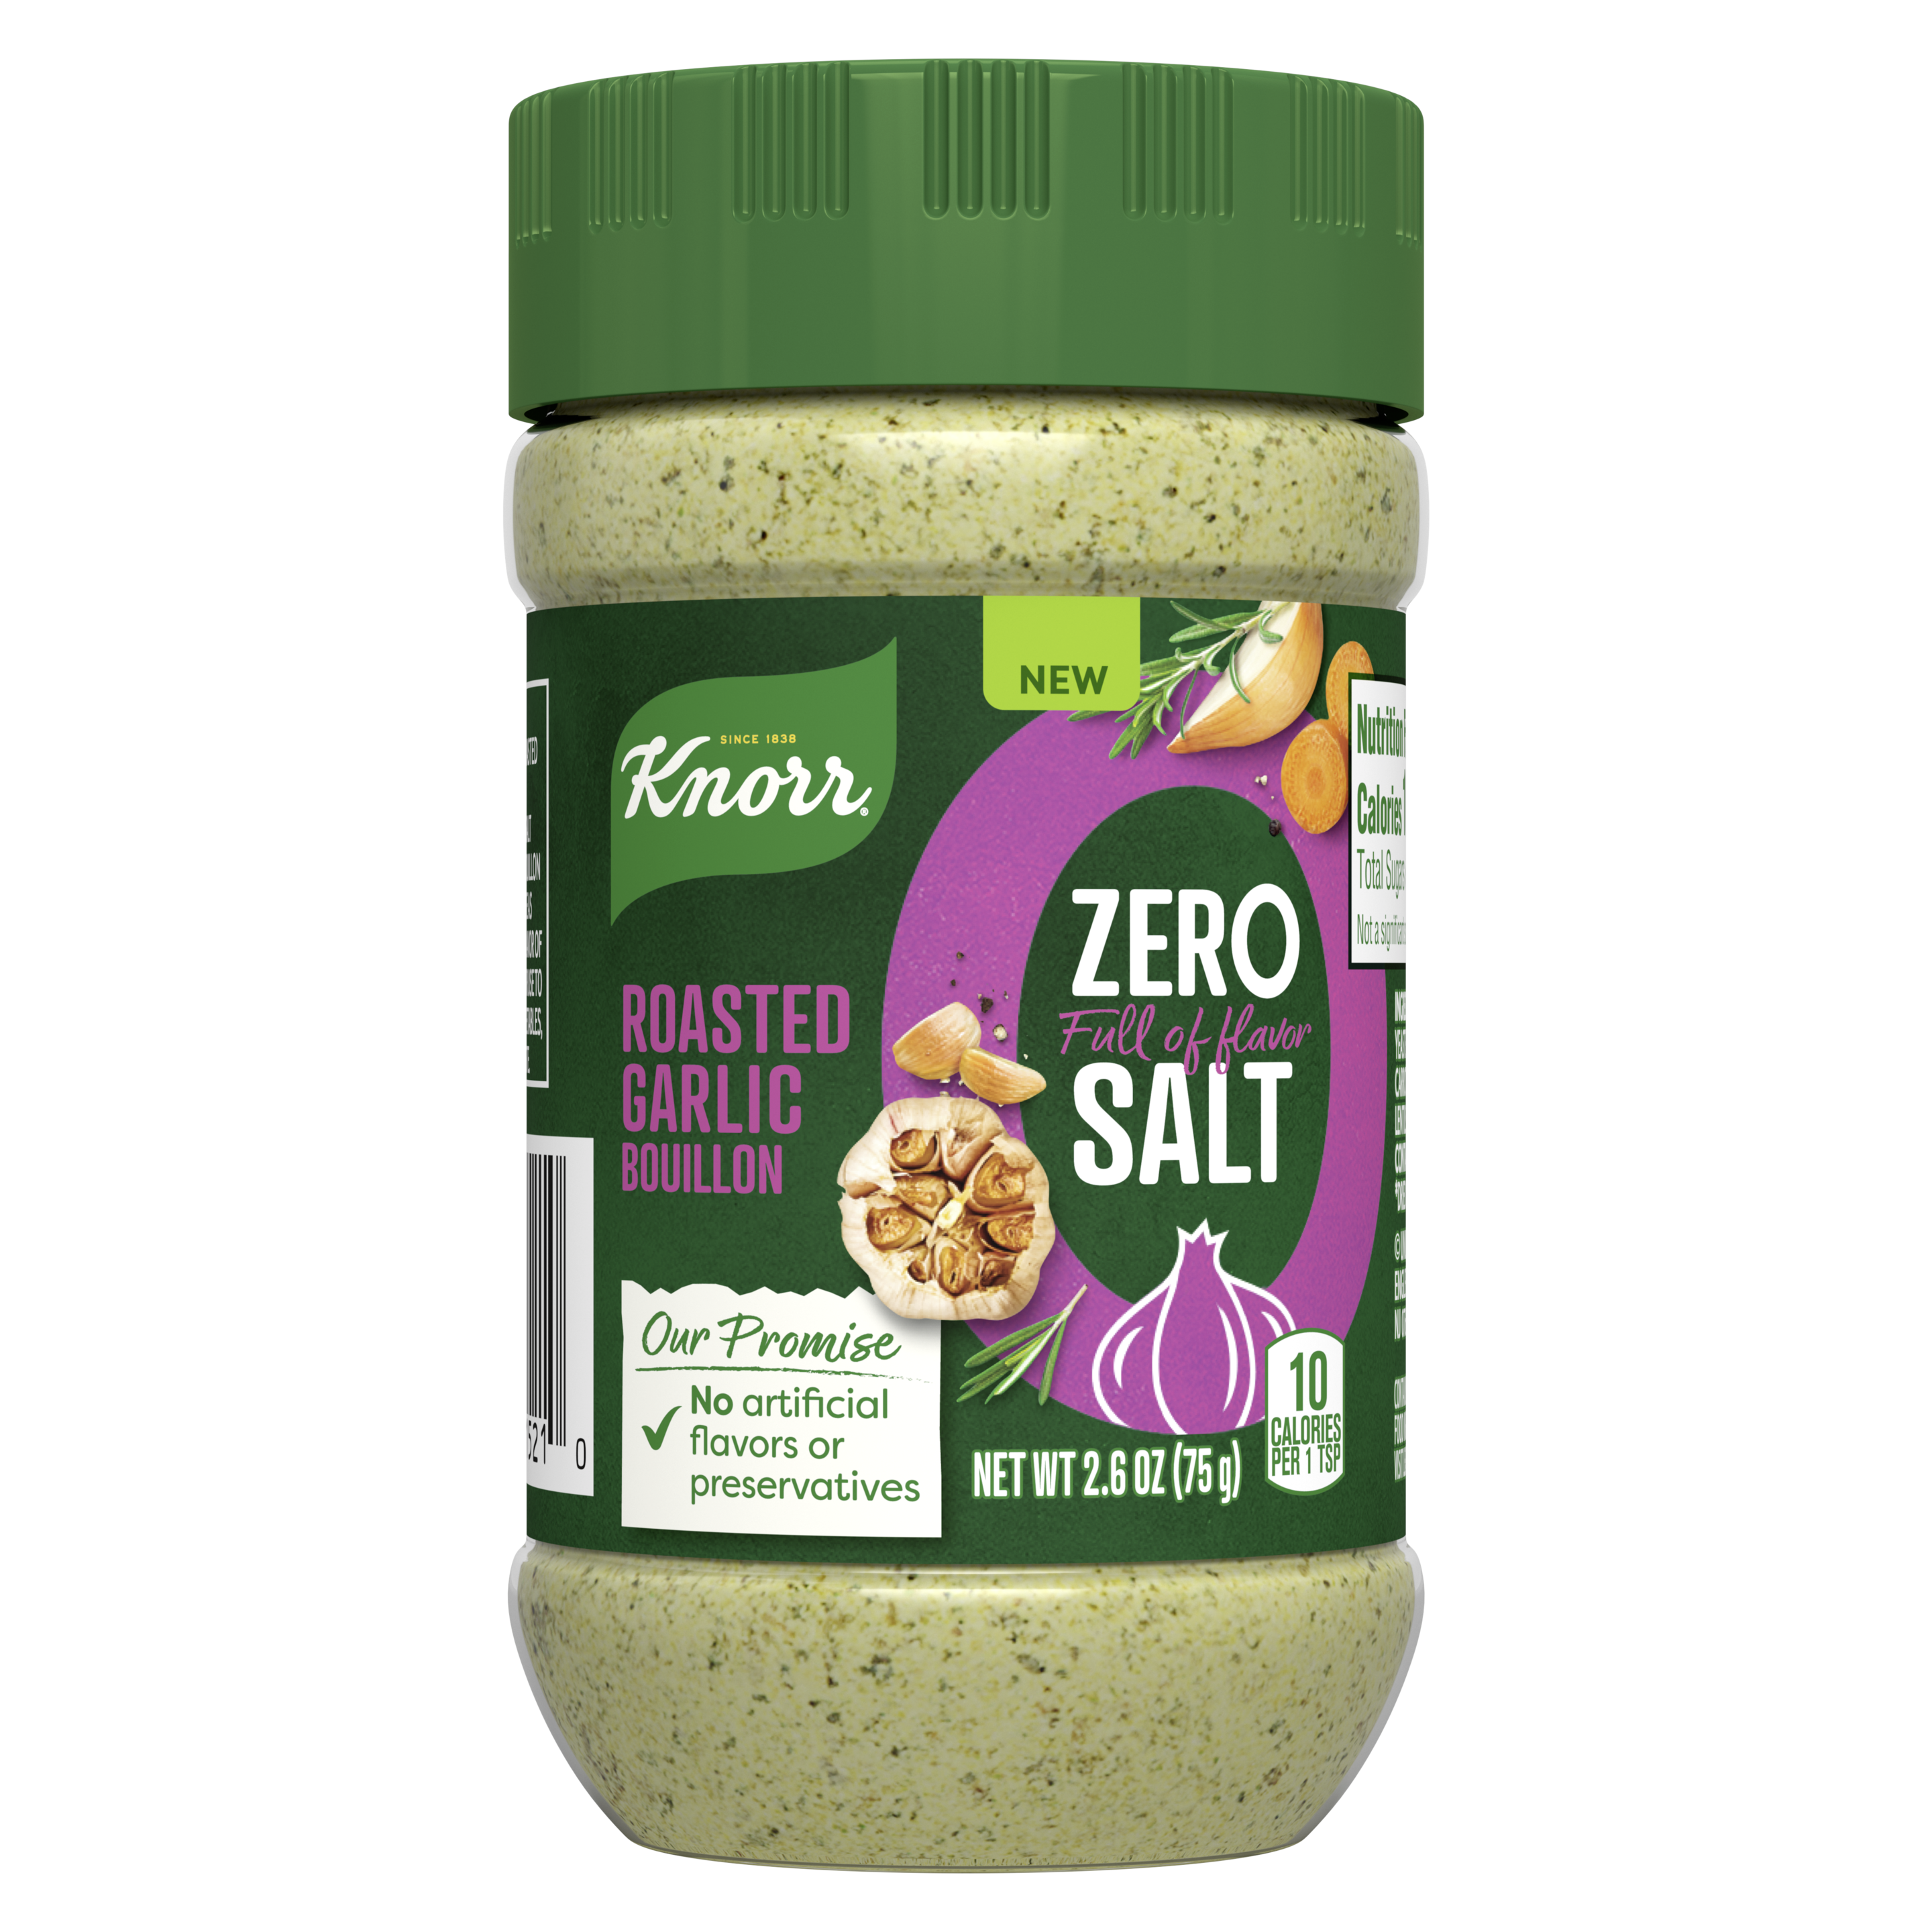 Knorr Zero Salt Roasted Garlic Bouillon Front of Pack